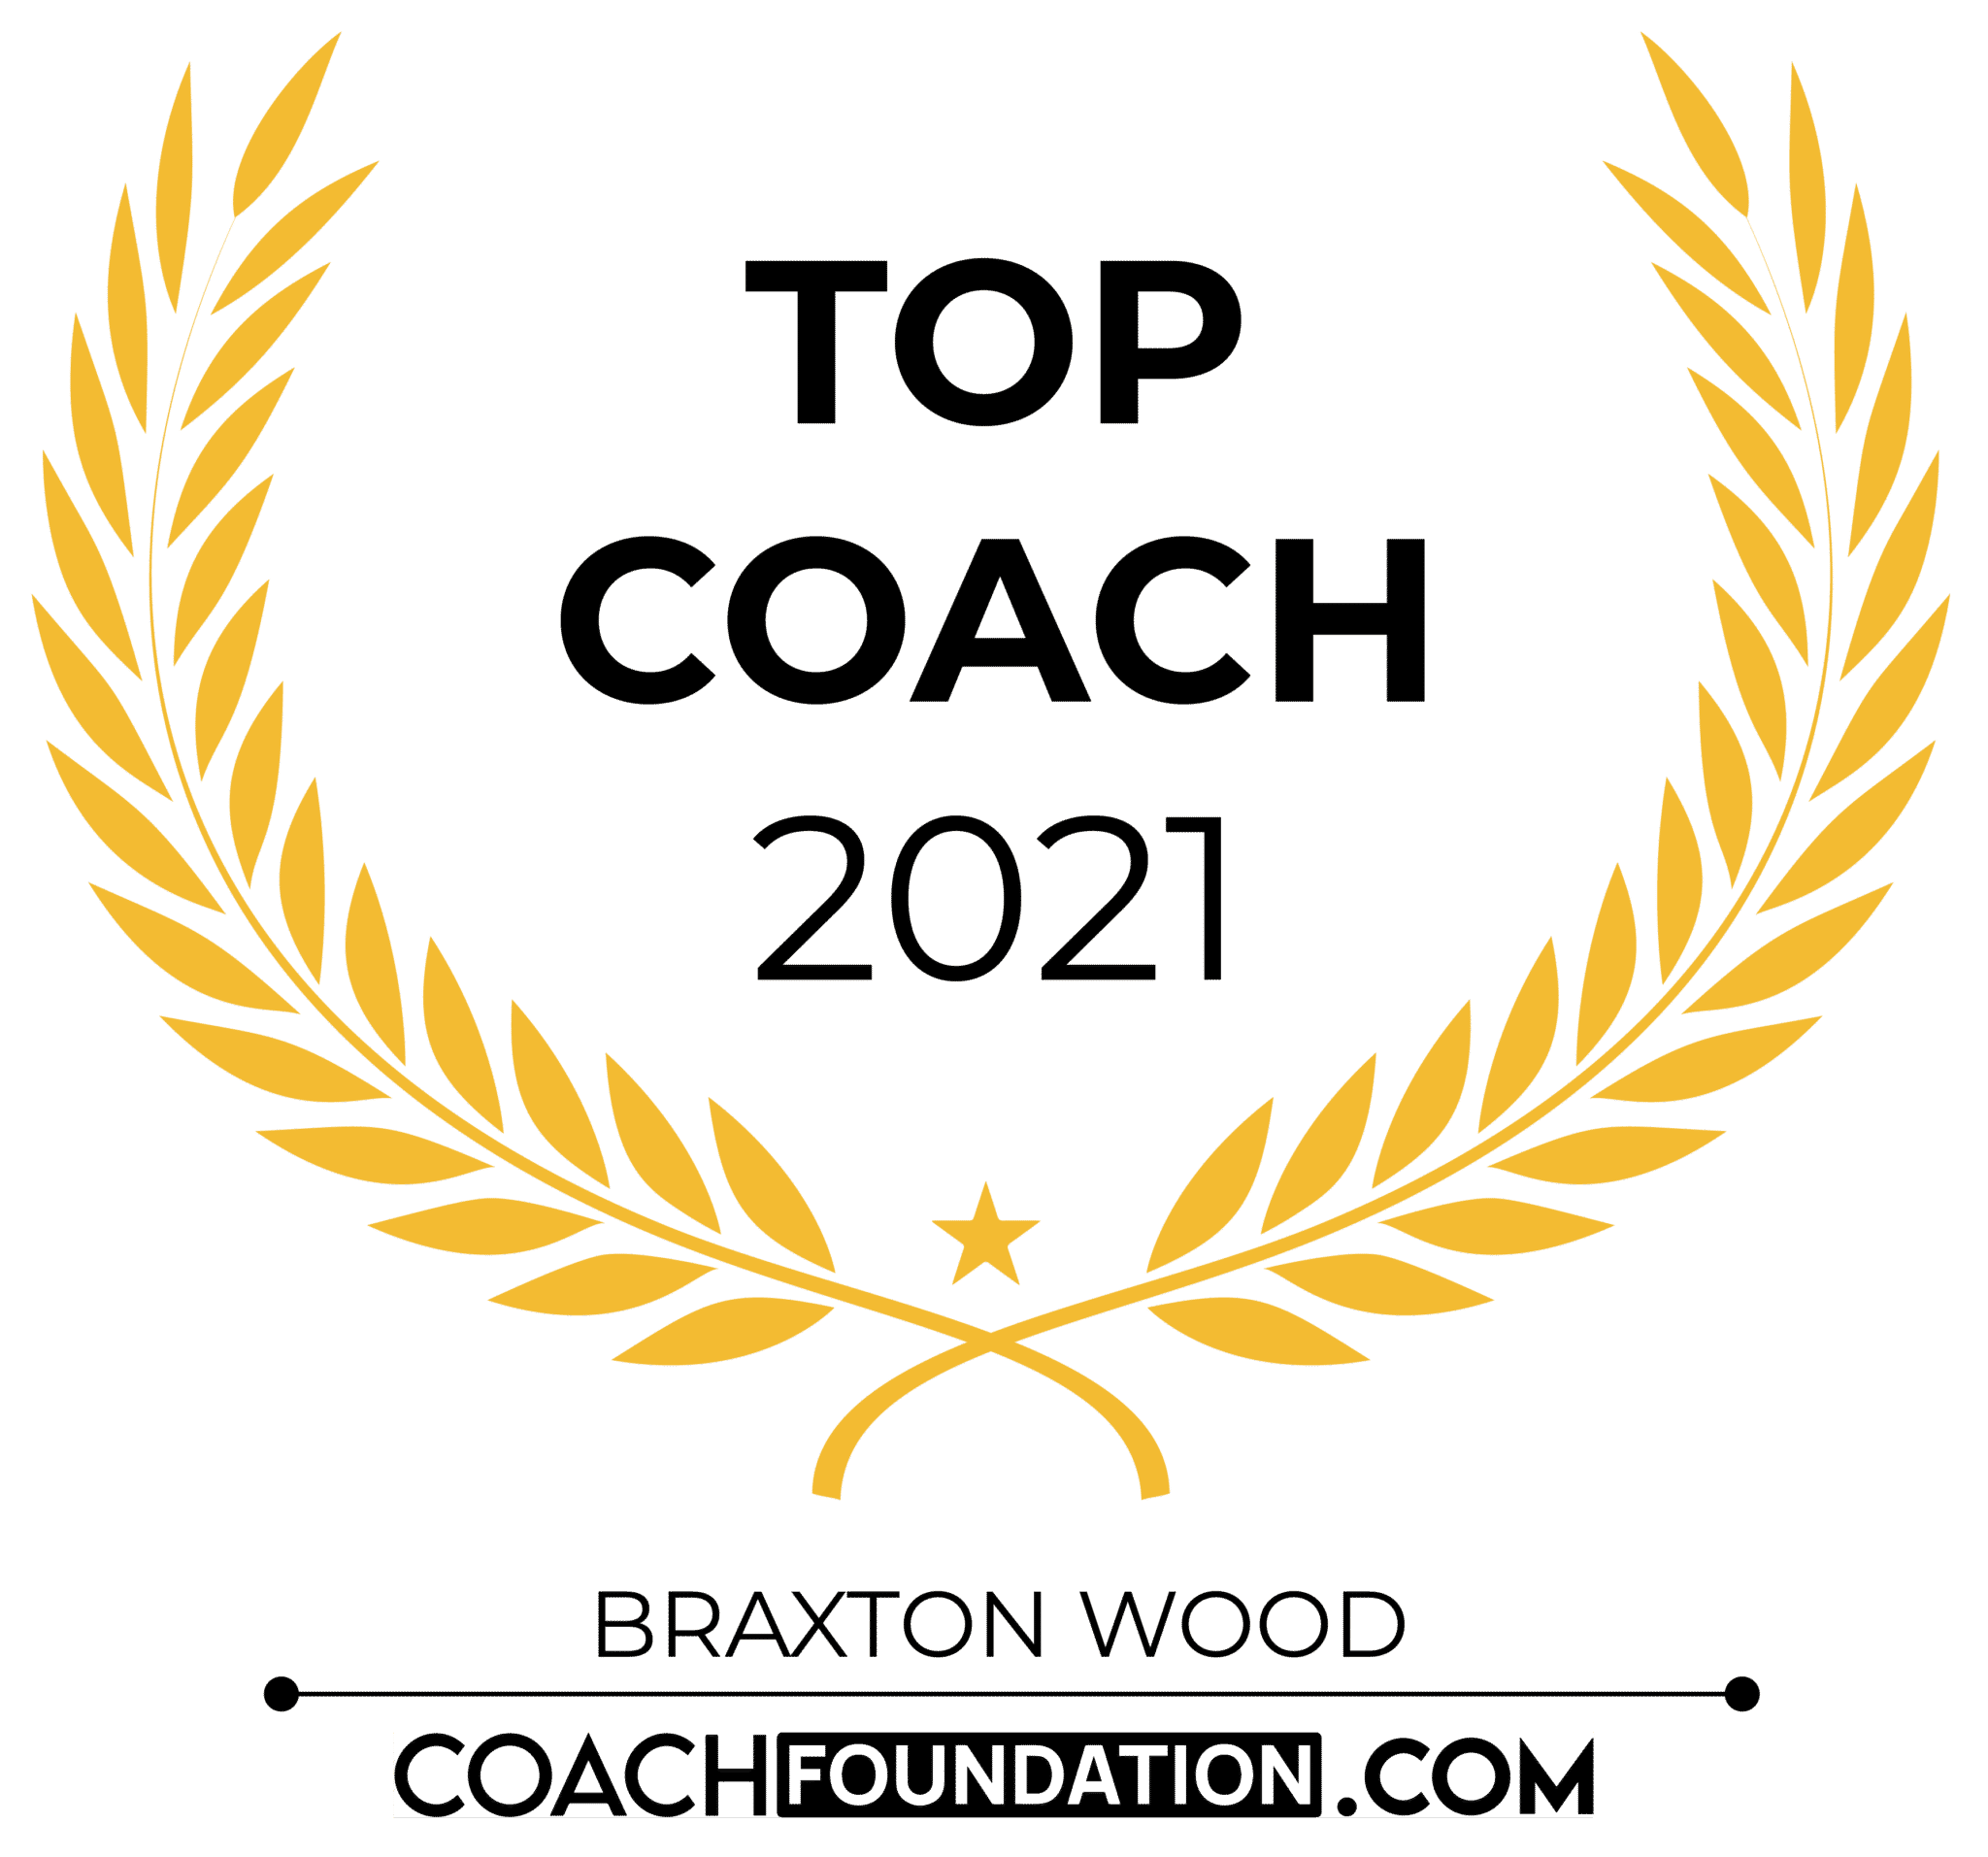 Coach Foundation Top Career Coach Award